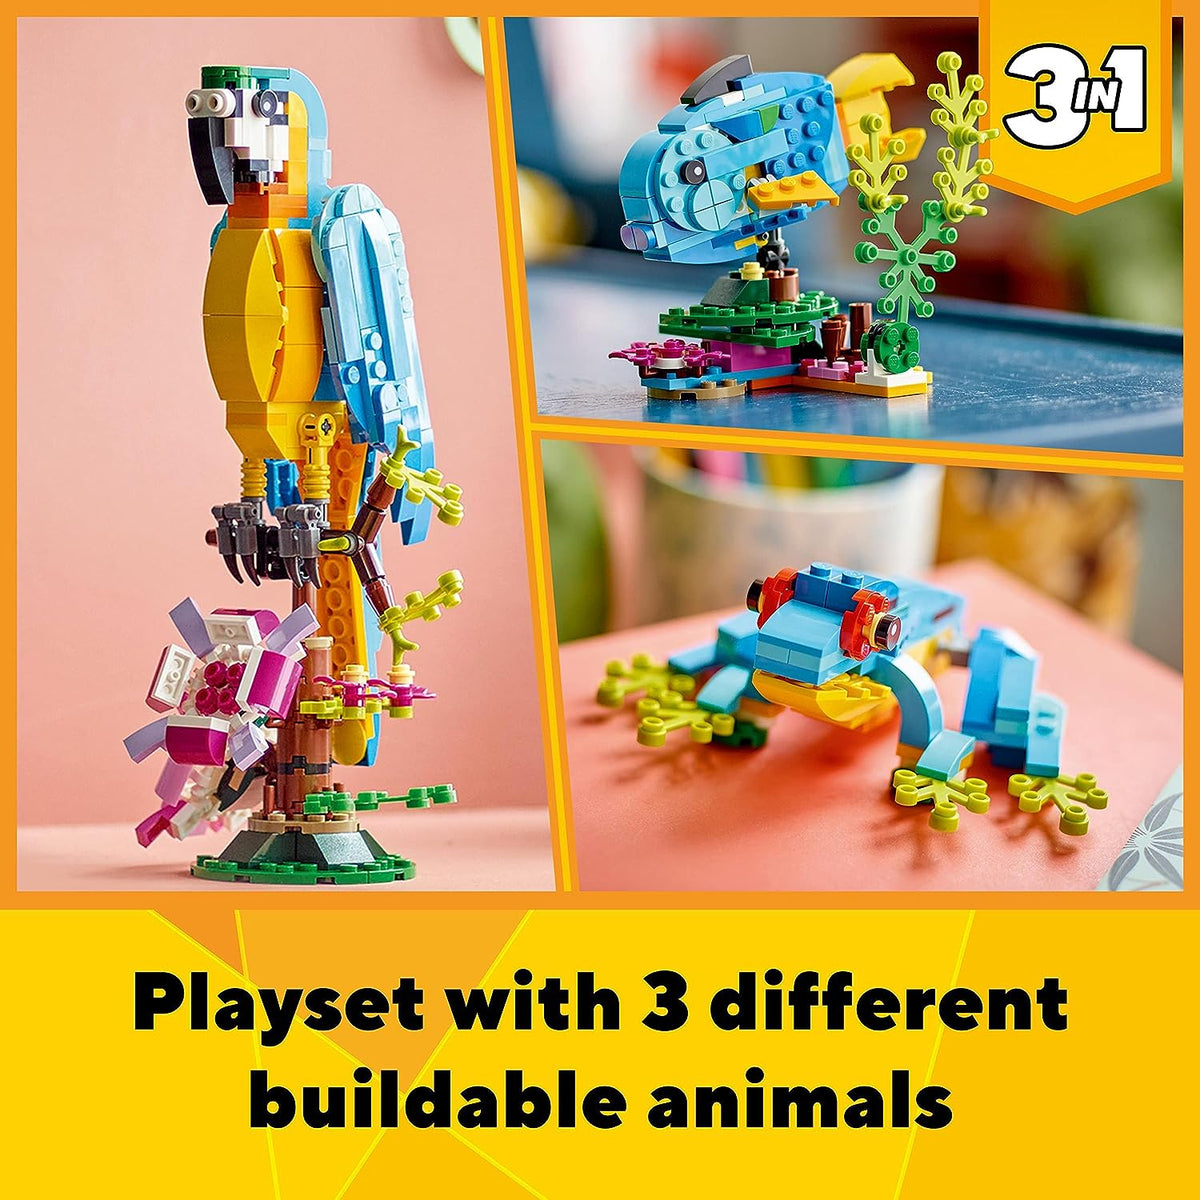 LEGO Creator 3-in-1 31136 Exotic Parrot Animals Building Set